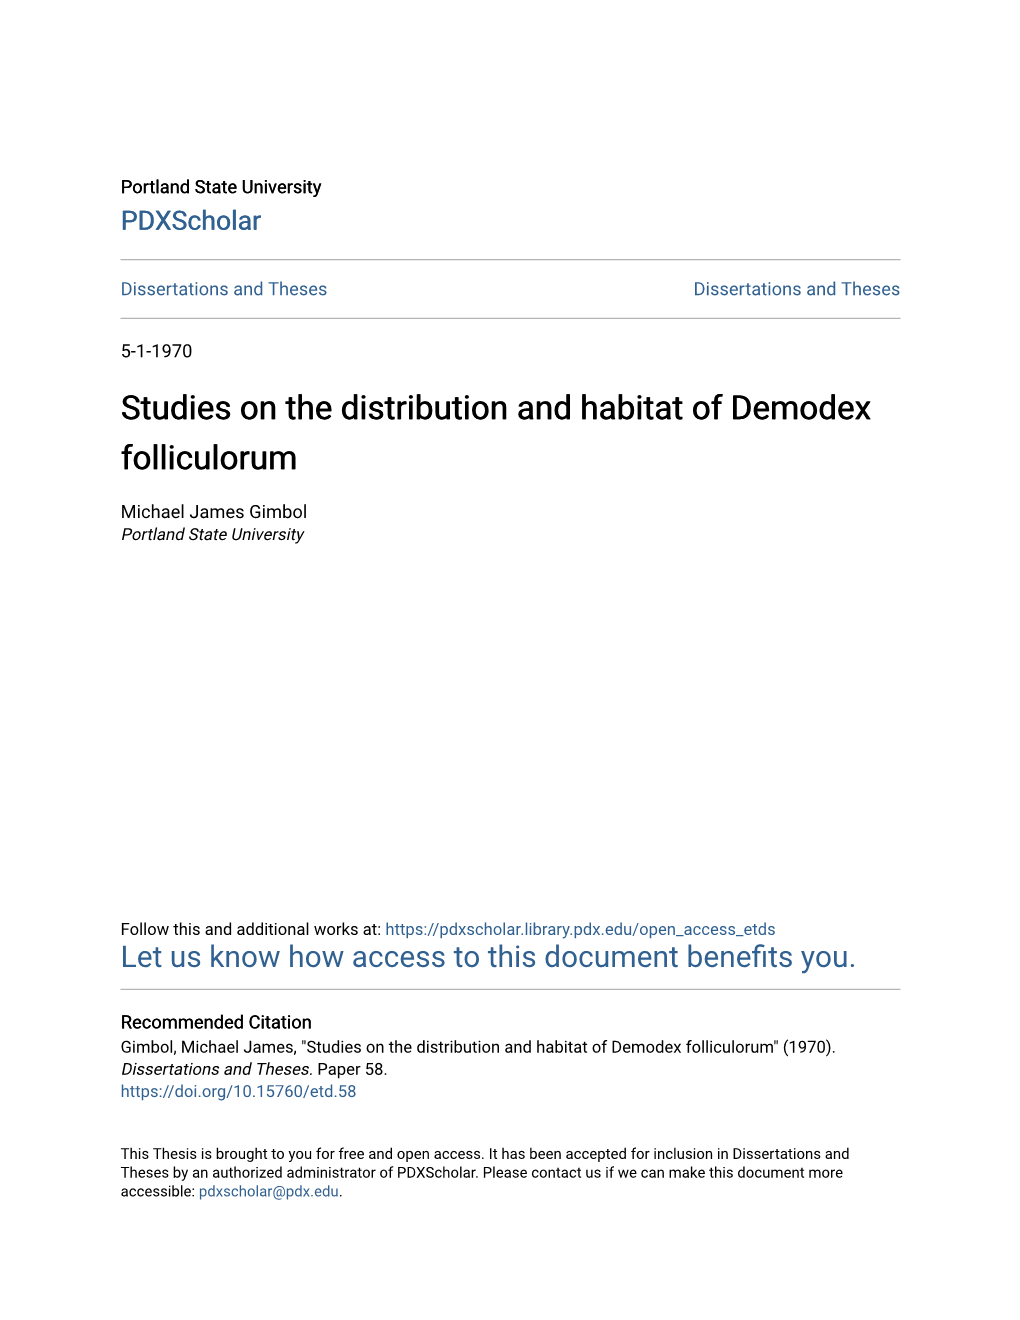 Studies on the Distribution and Habitat of Demodex Folliculorum